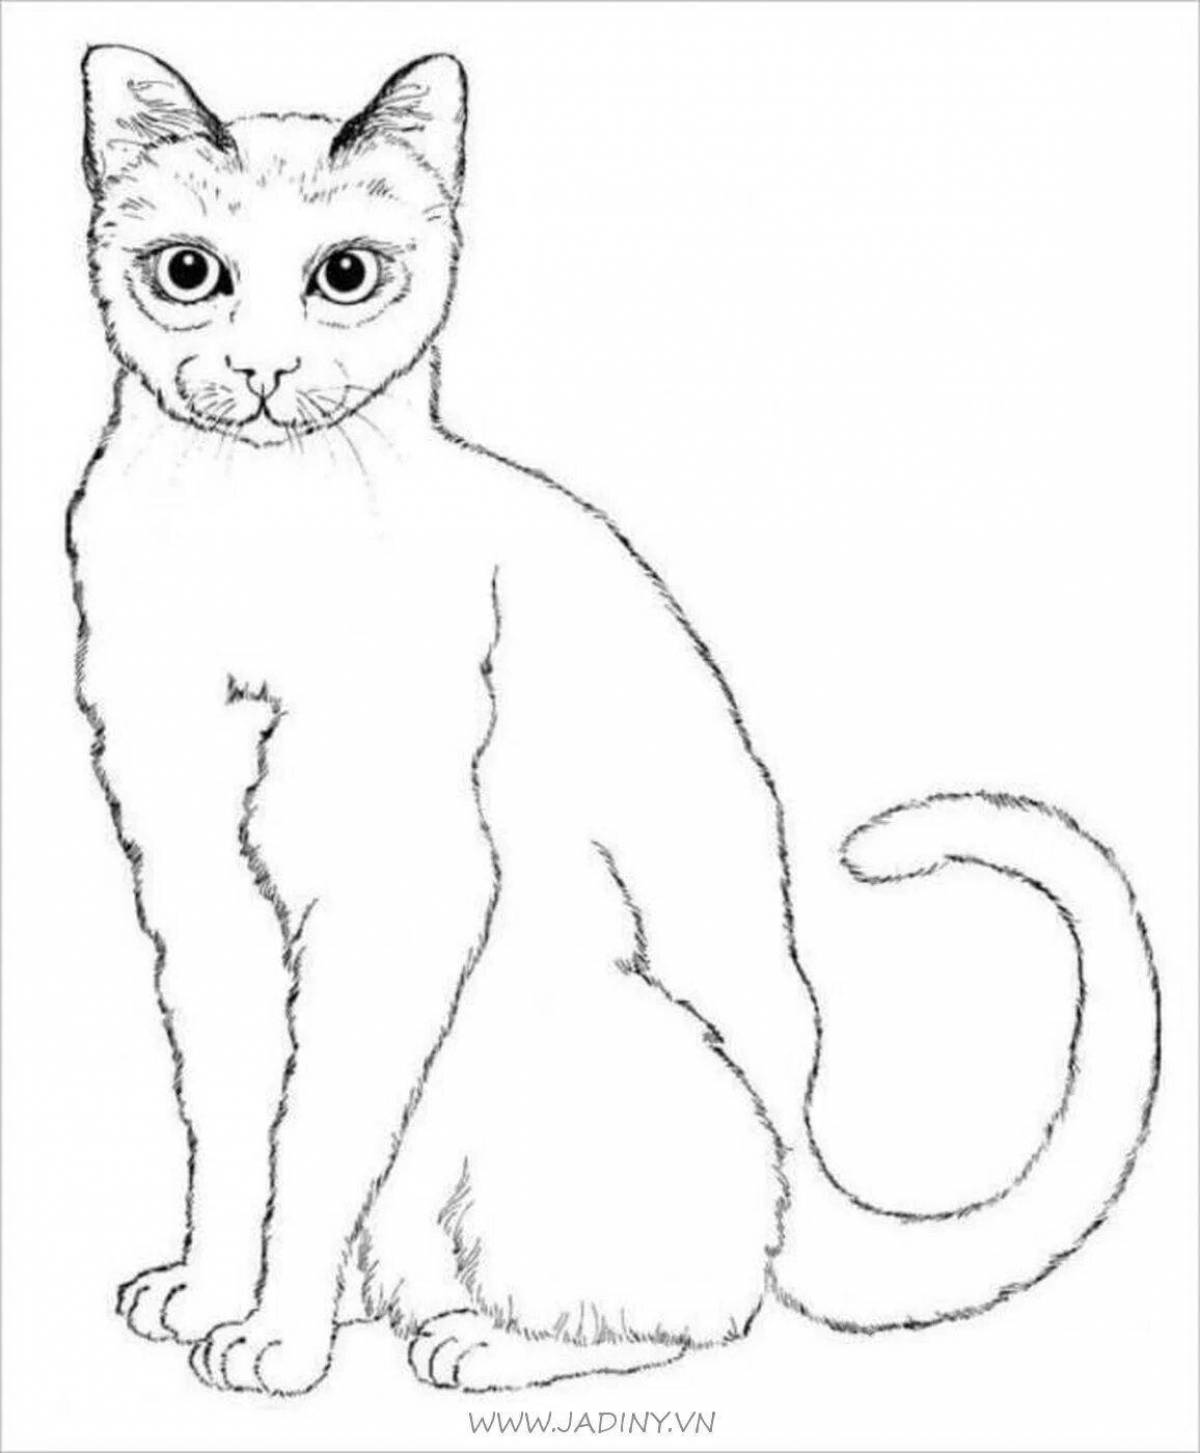 Coloring page inquisitive scottish cat